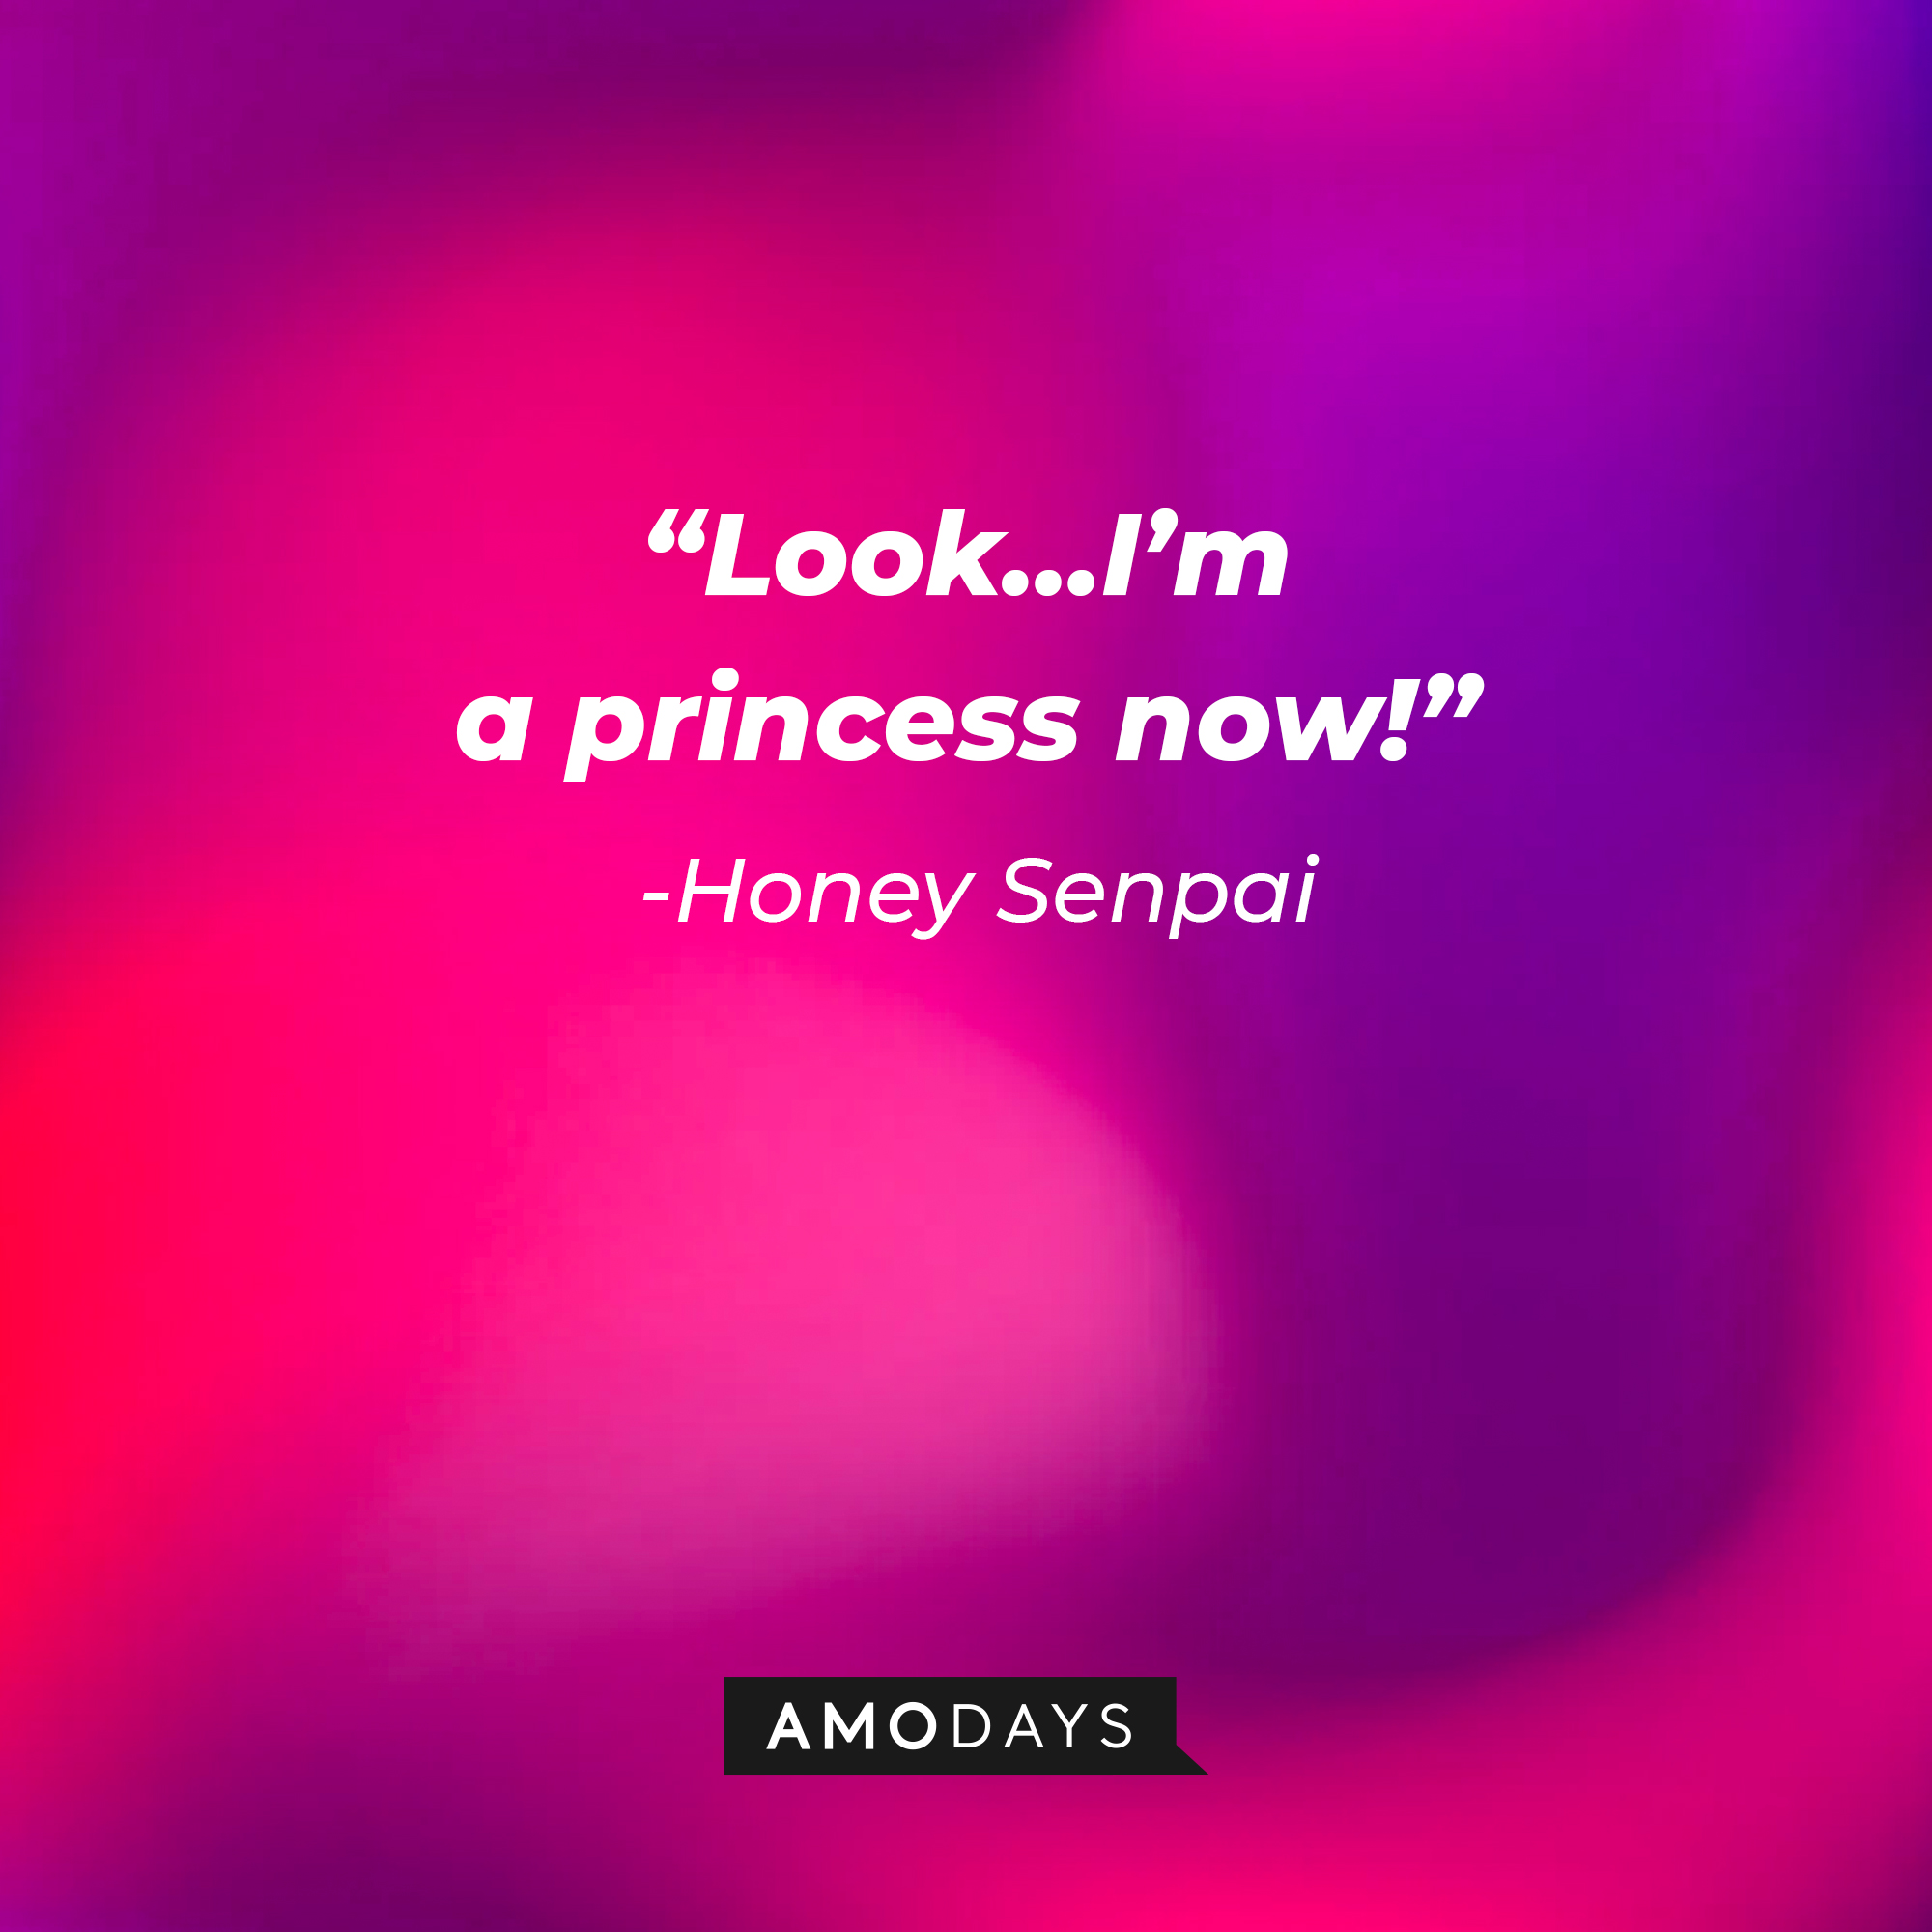 Honey Senpai’s quote: “Look… I’m a princess now!” | Source: AmoDays